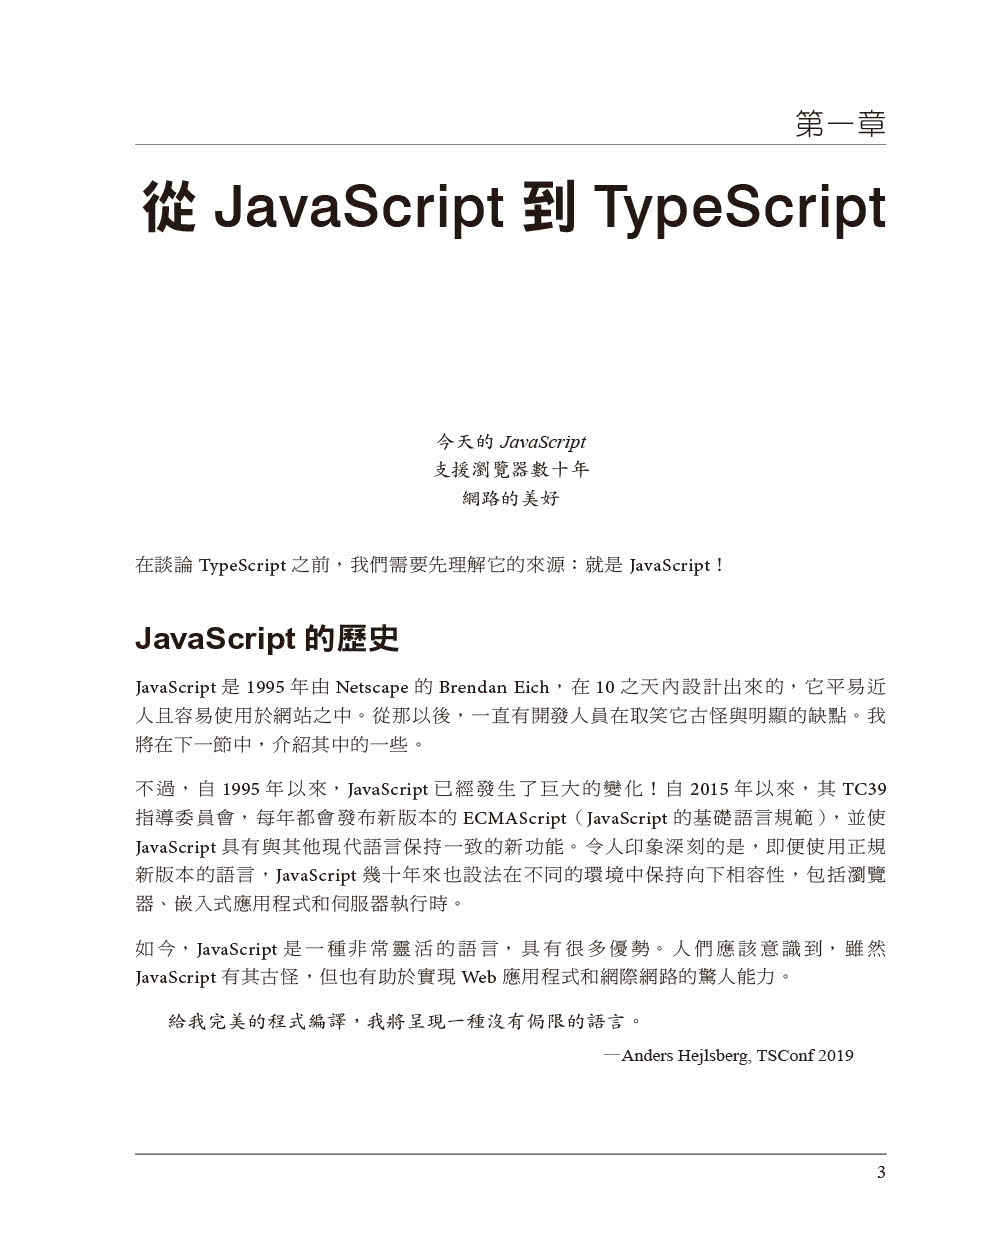 TypeScript學習手冊